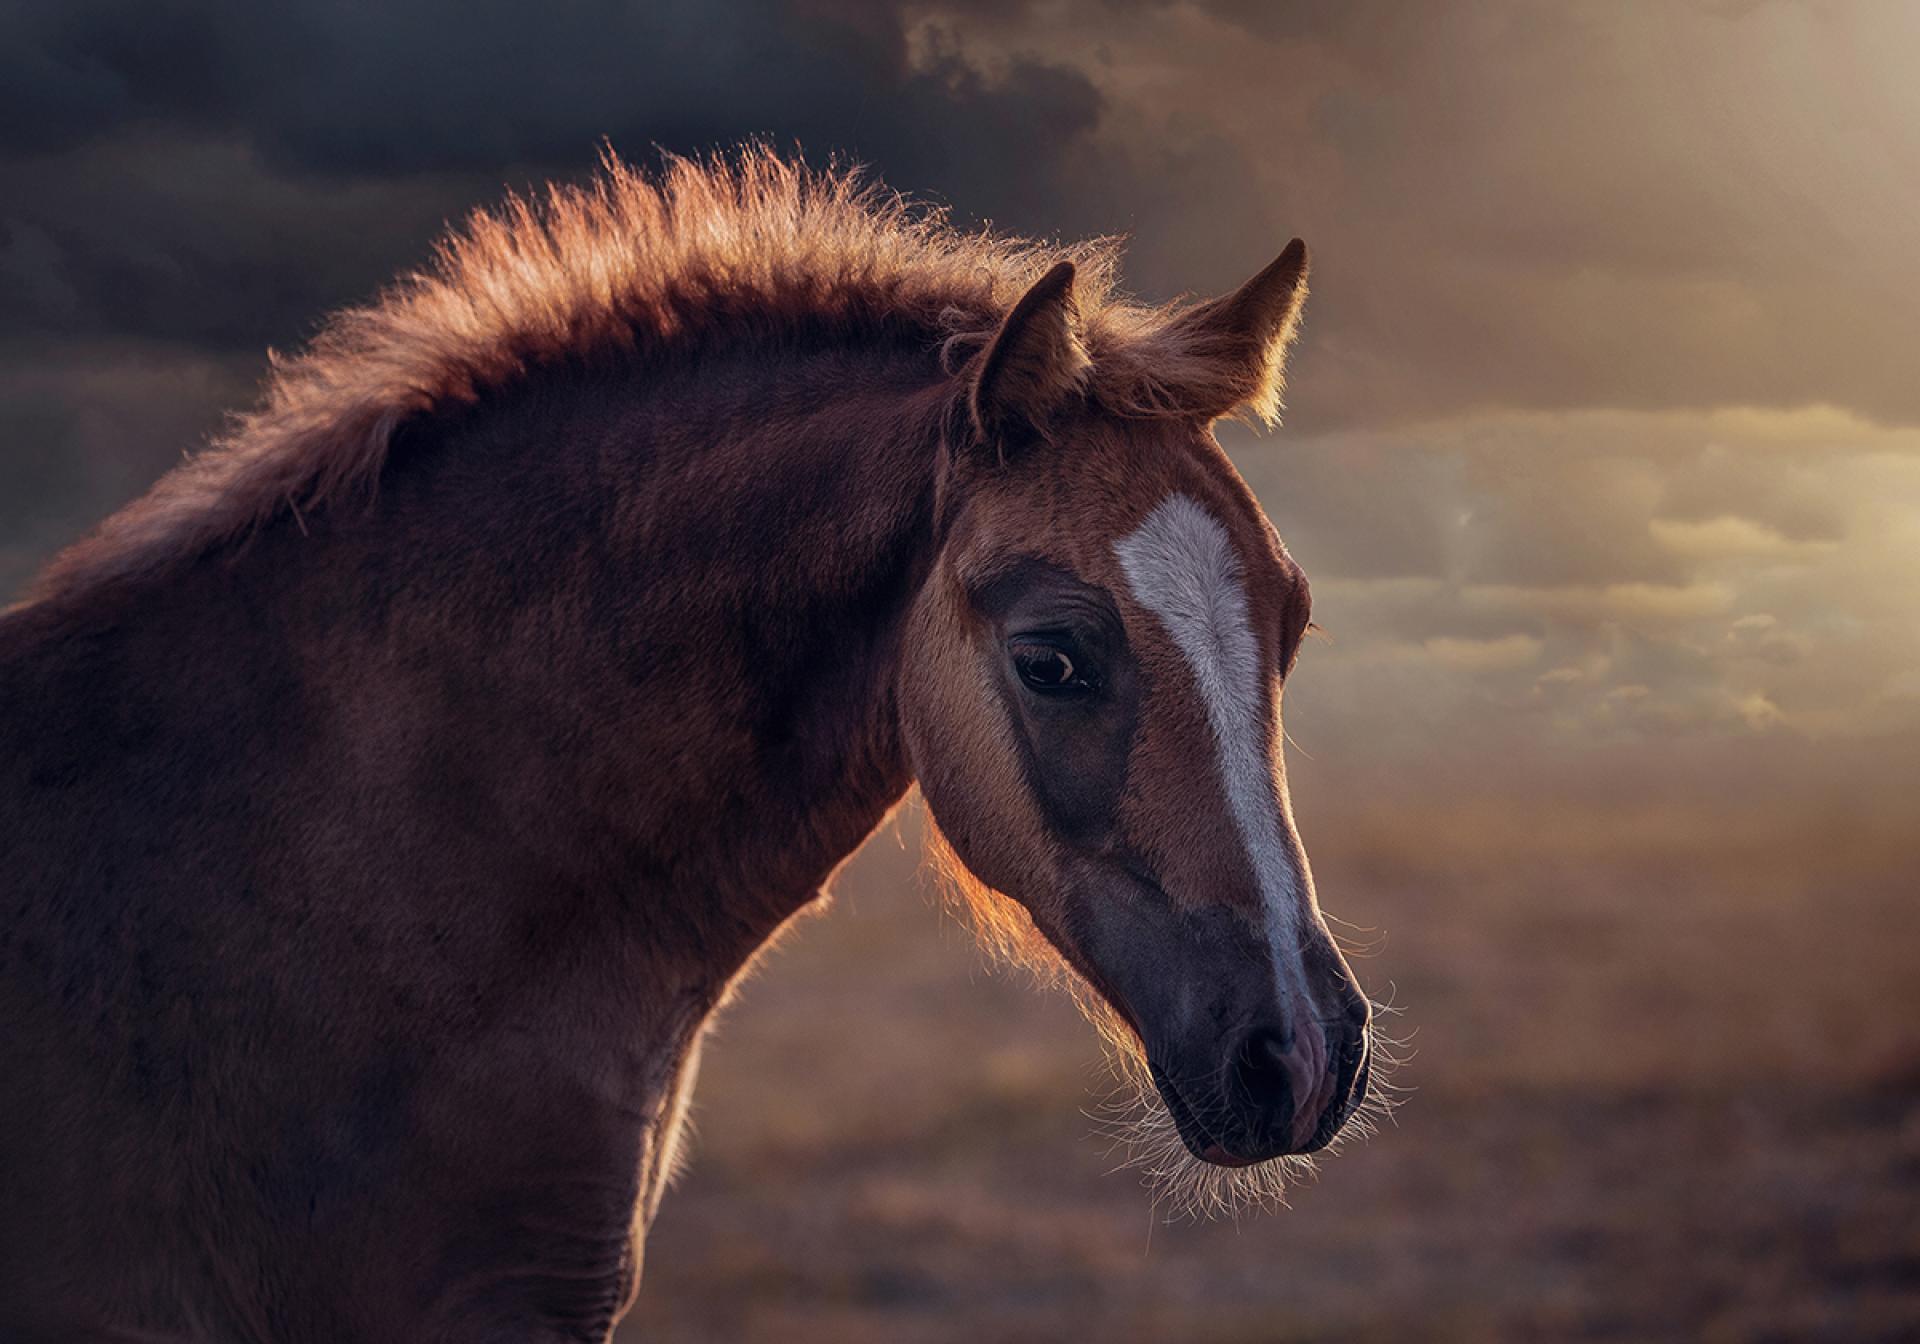 European Photography Awards Winner - Magic Of Horses